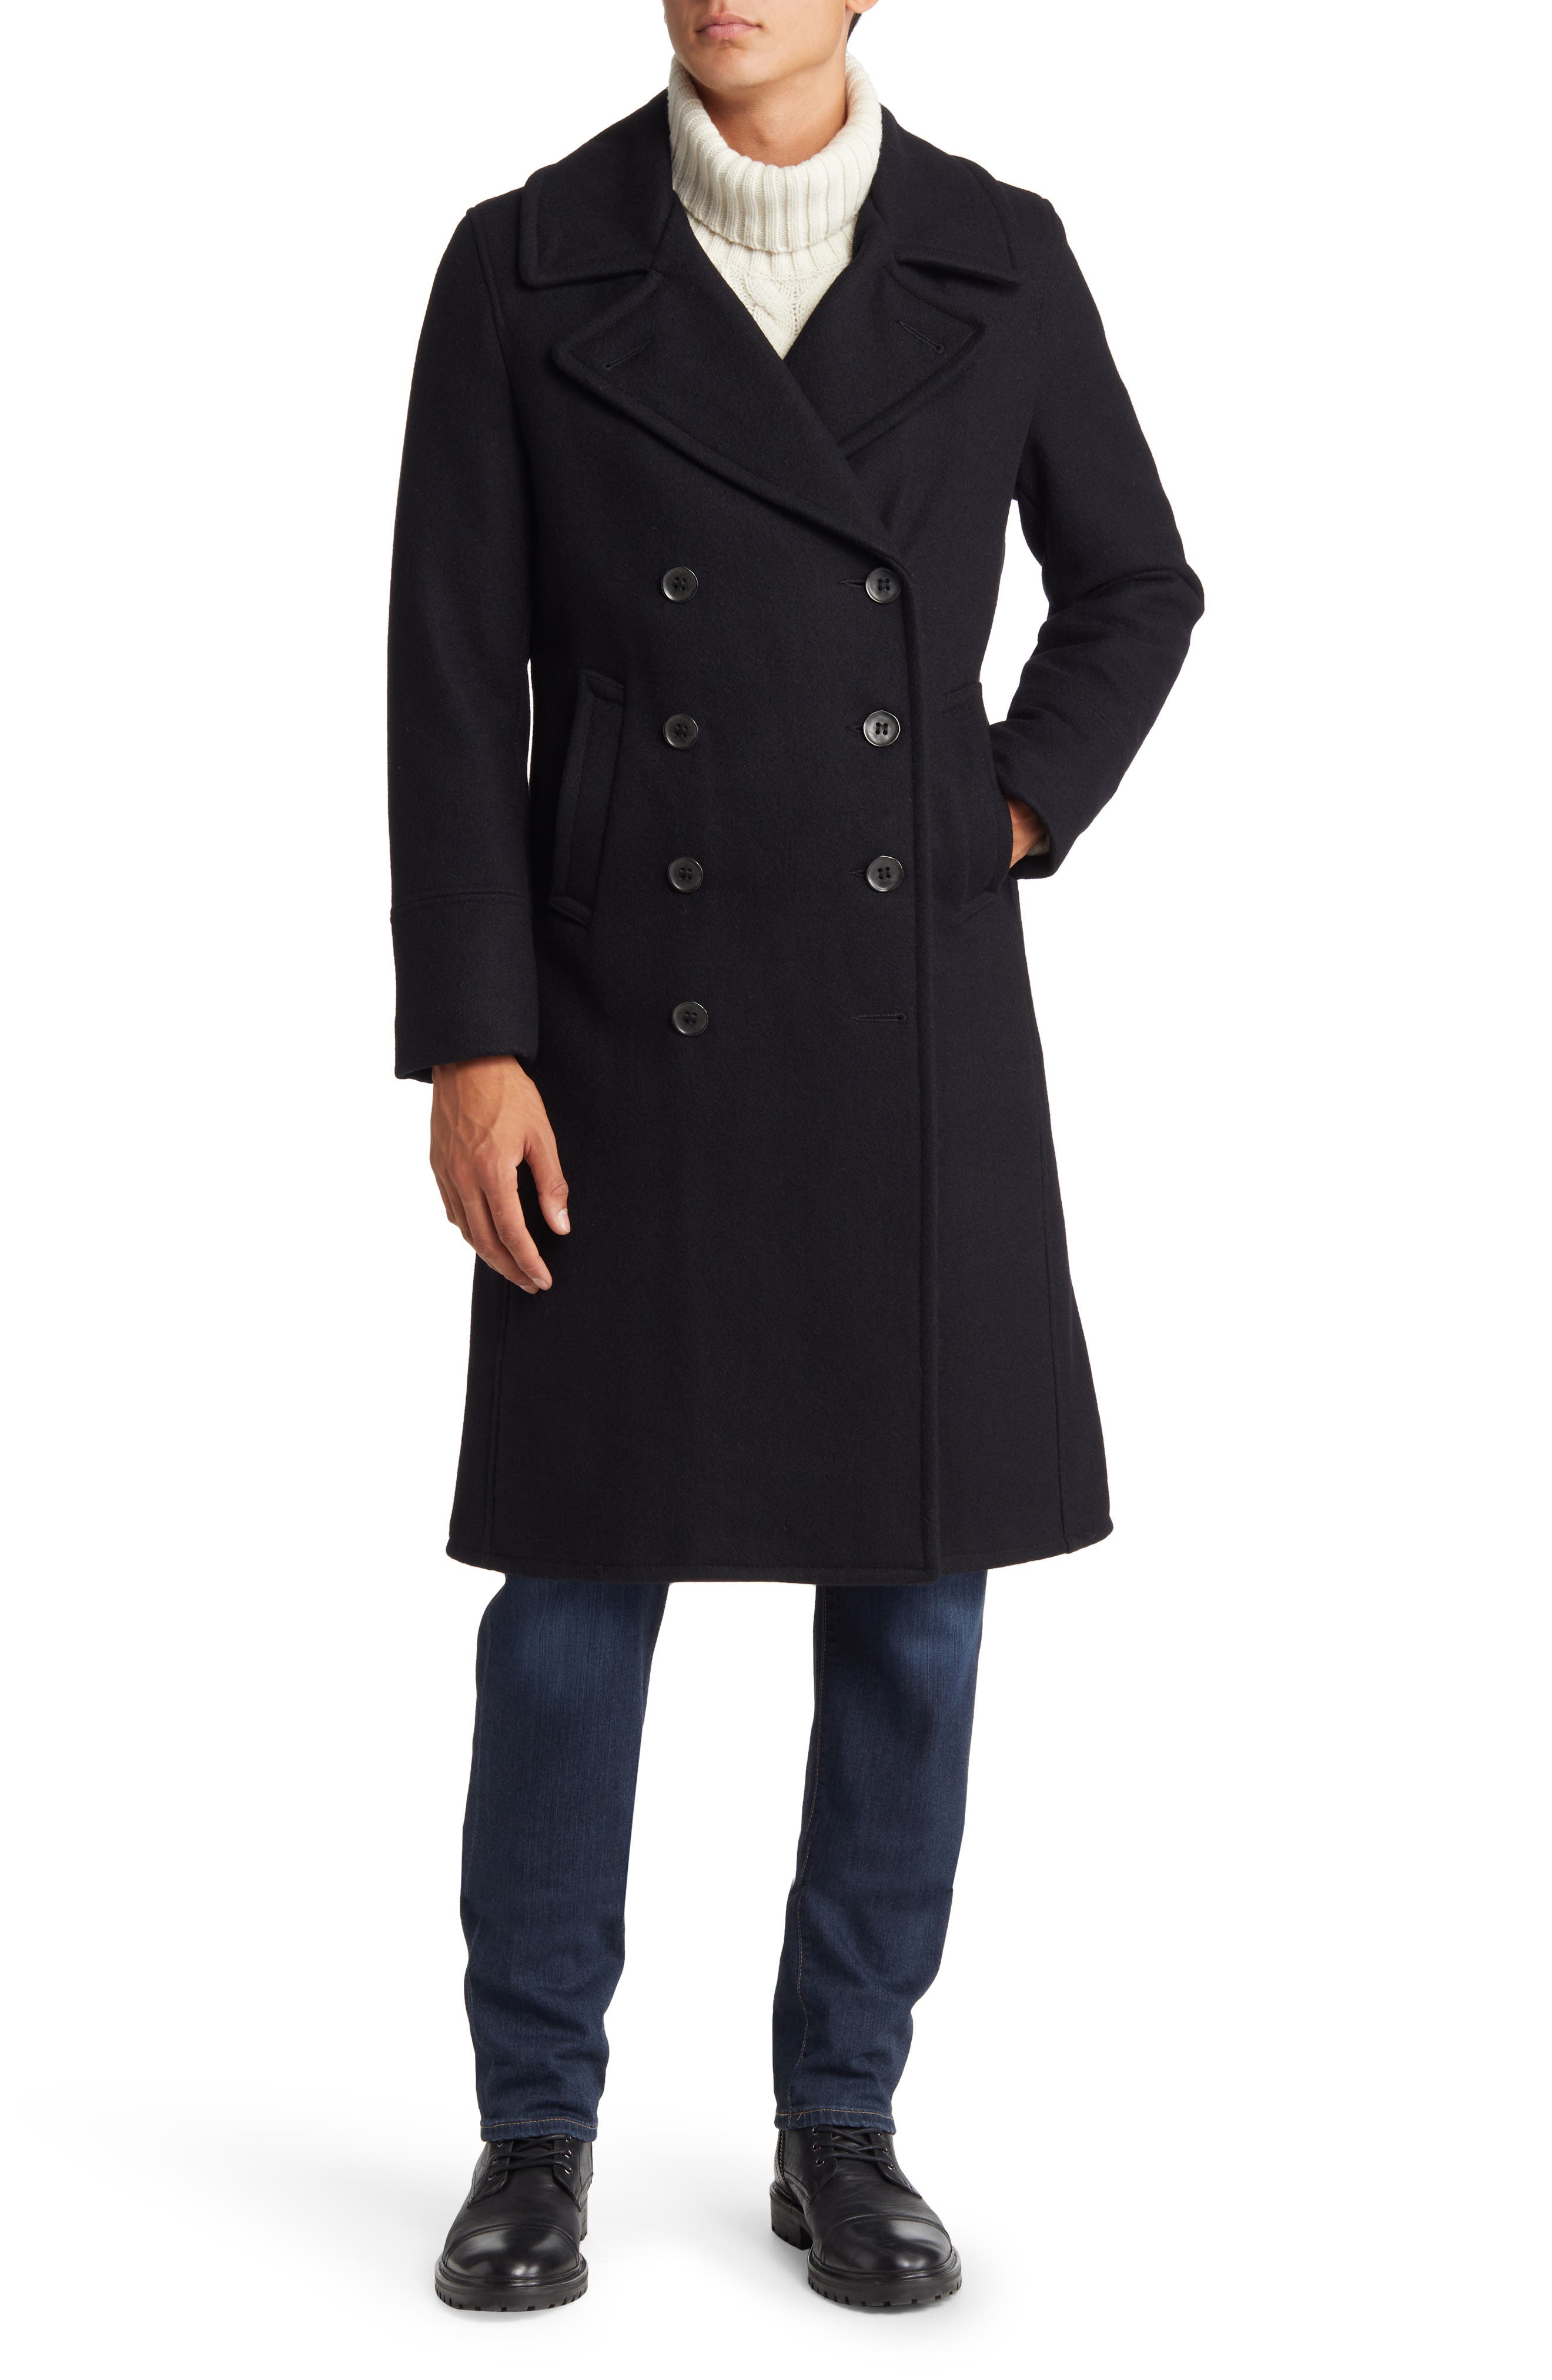 discount 40% White S MEN FASHION Coats Basic NoName Long coat 